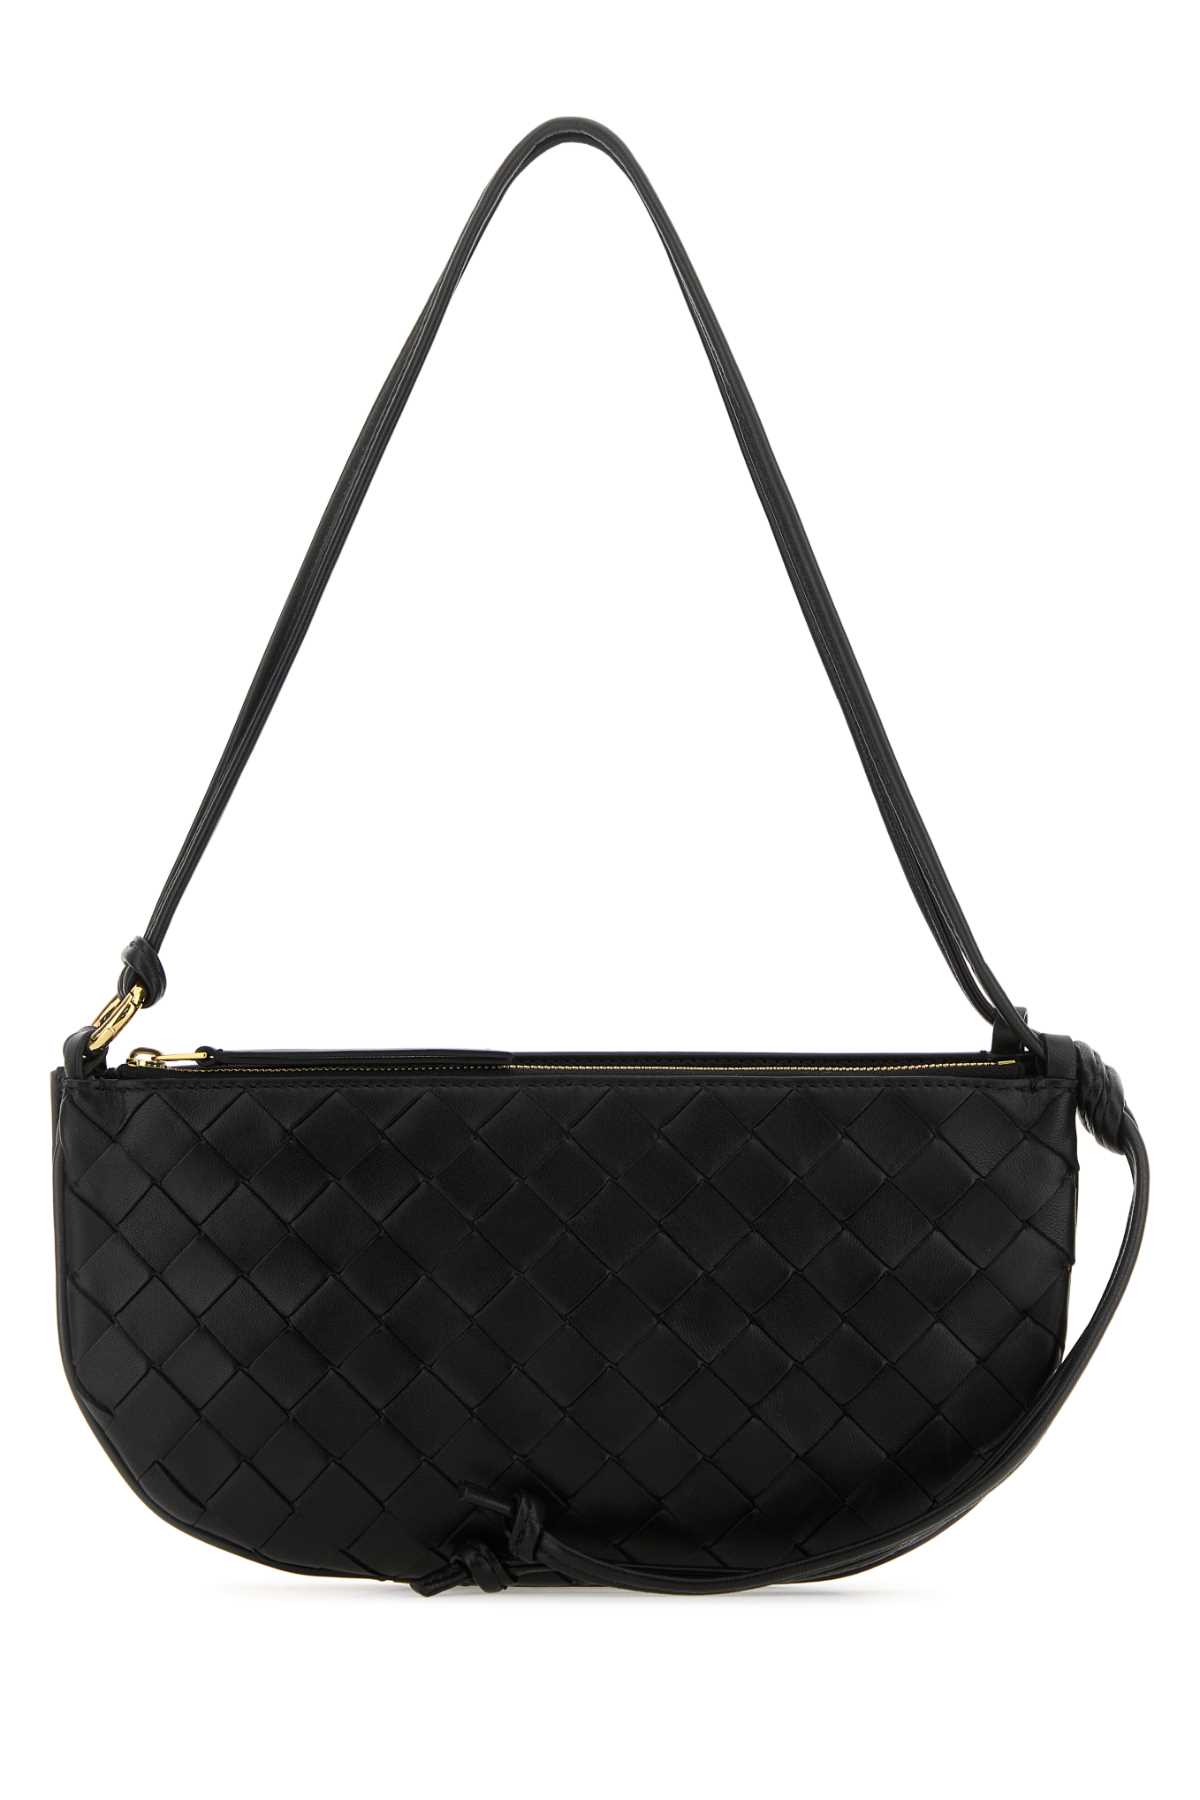 Bottega Veneta Black Leather Gemelli Shoulder Bag